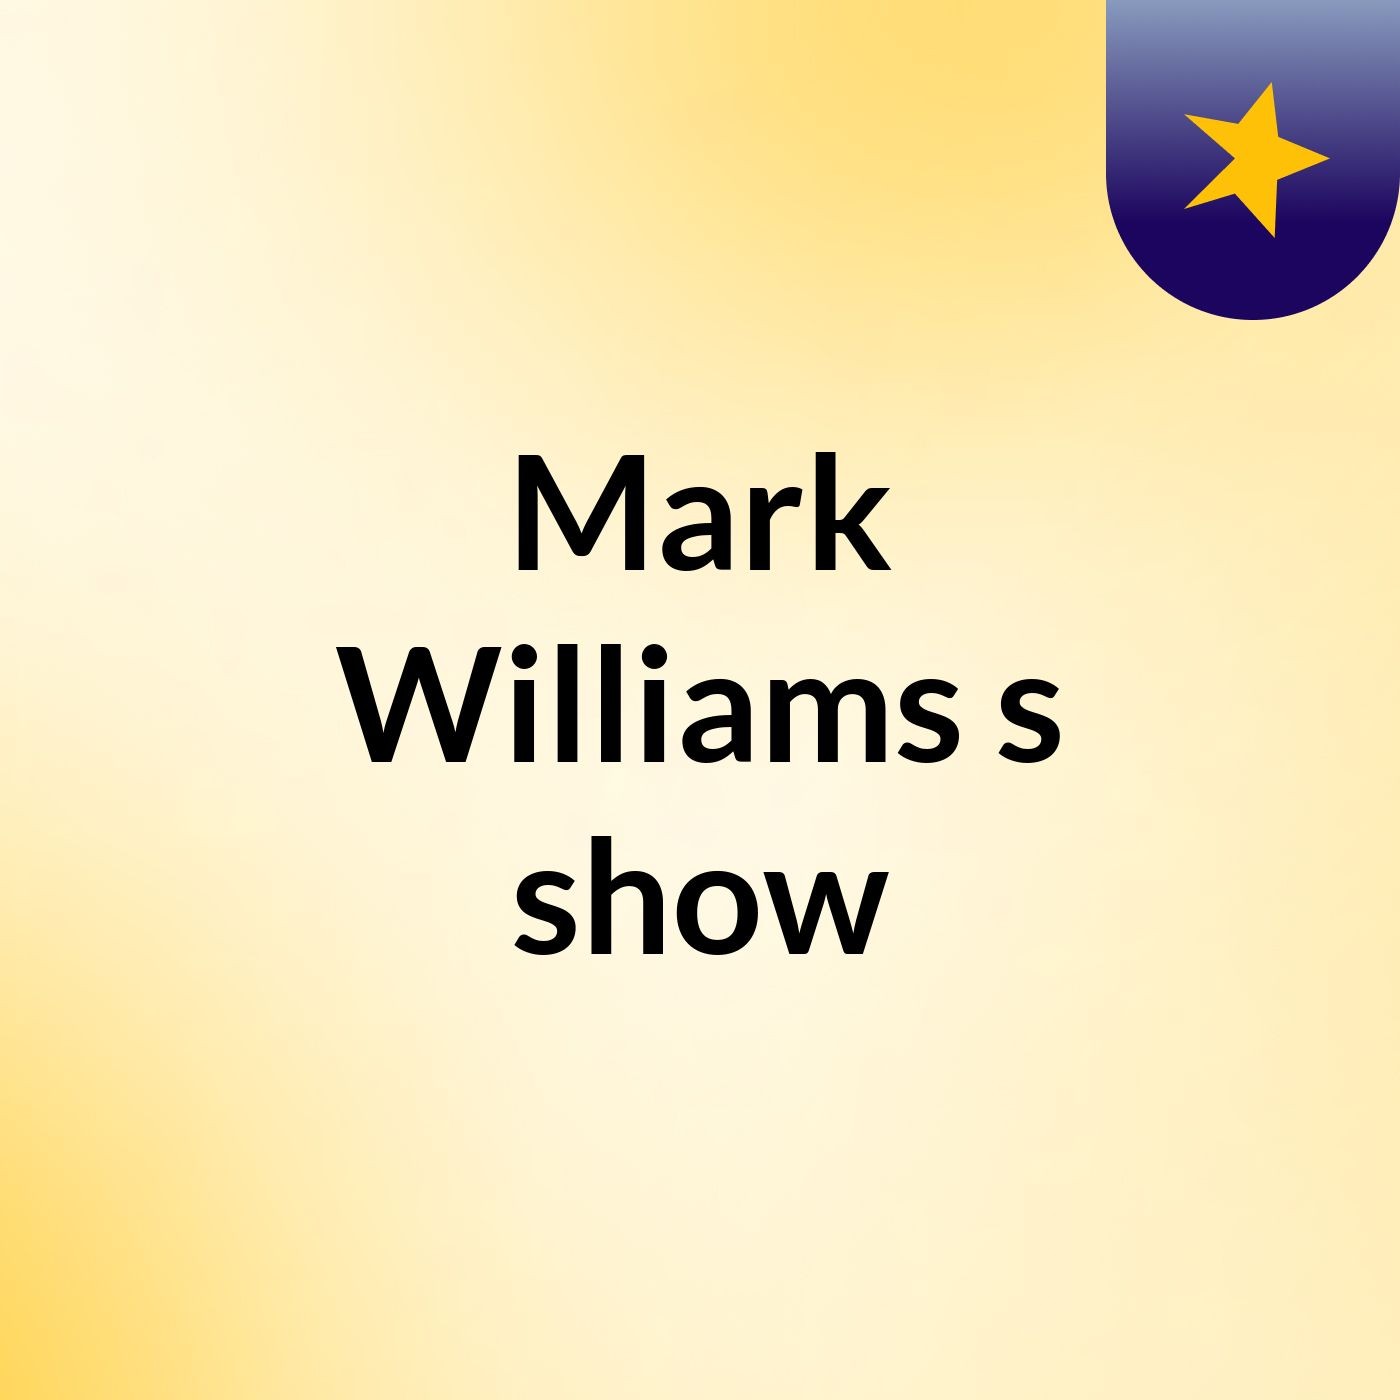 Mark Williams's show